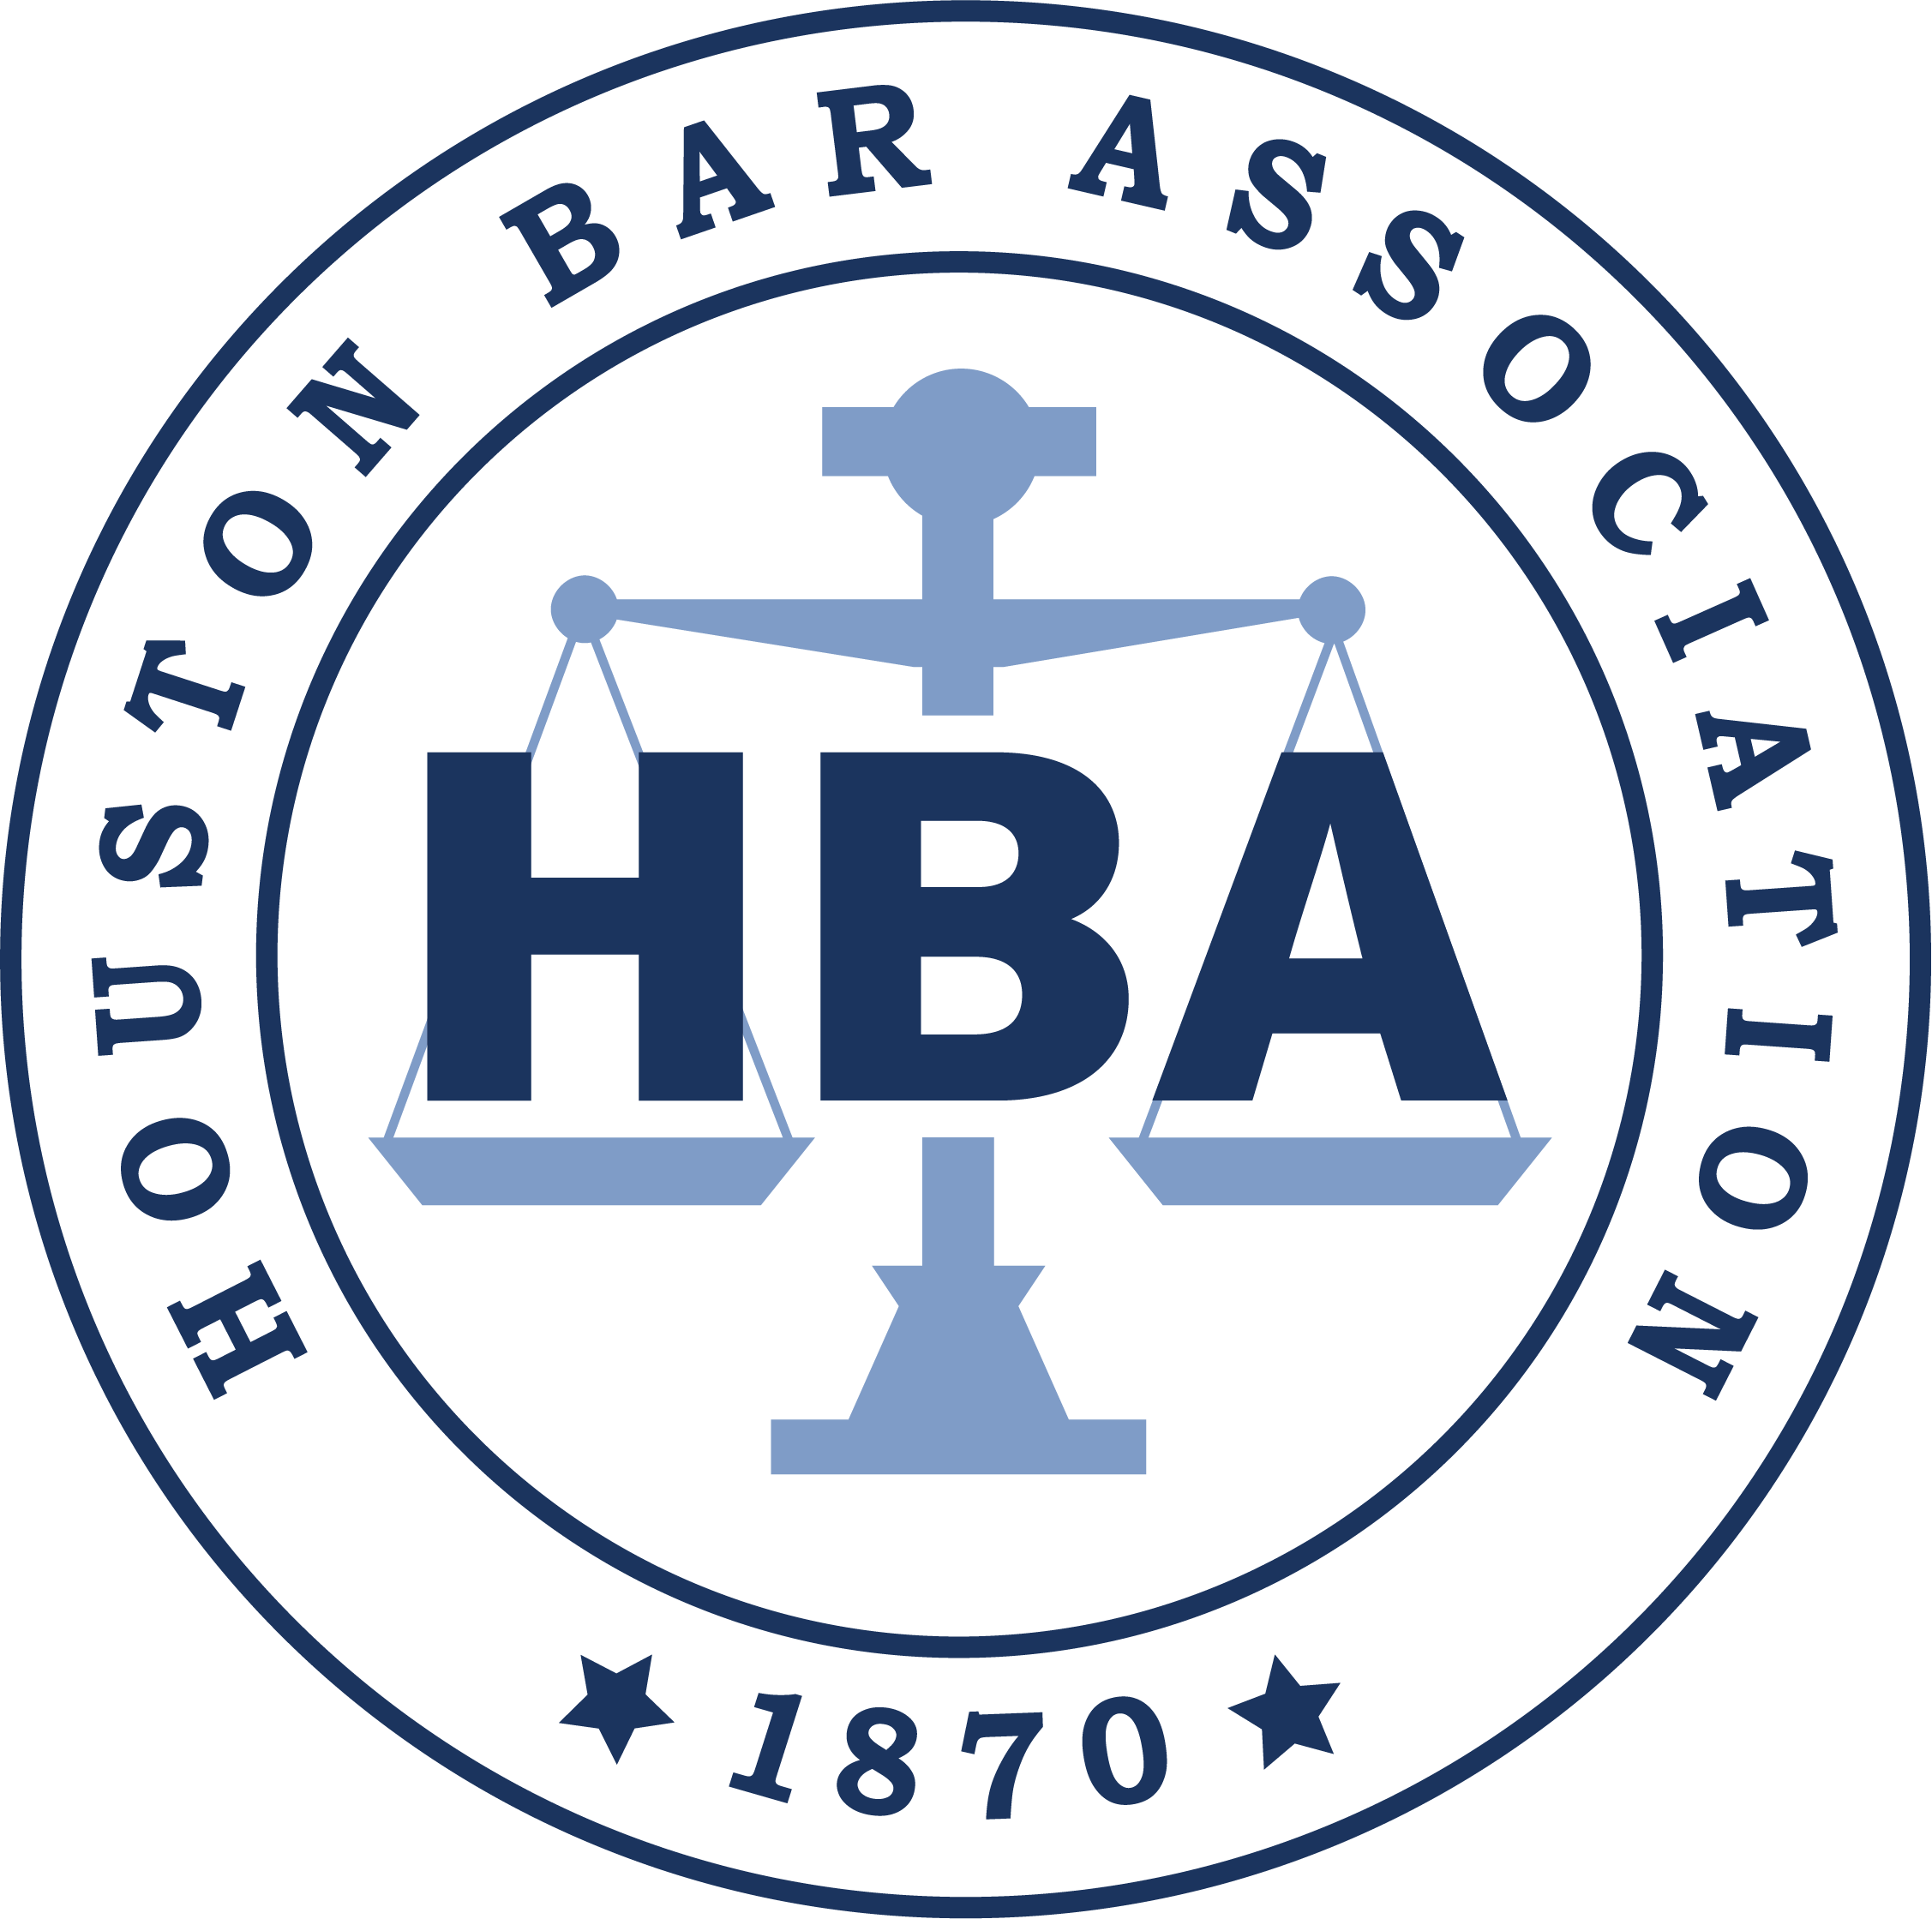 Emblem of the Houston Bar Association, representing the local legal community involvement of Borunda & Fomby.